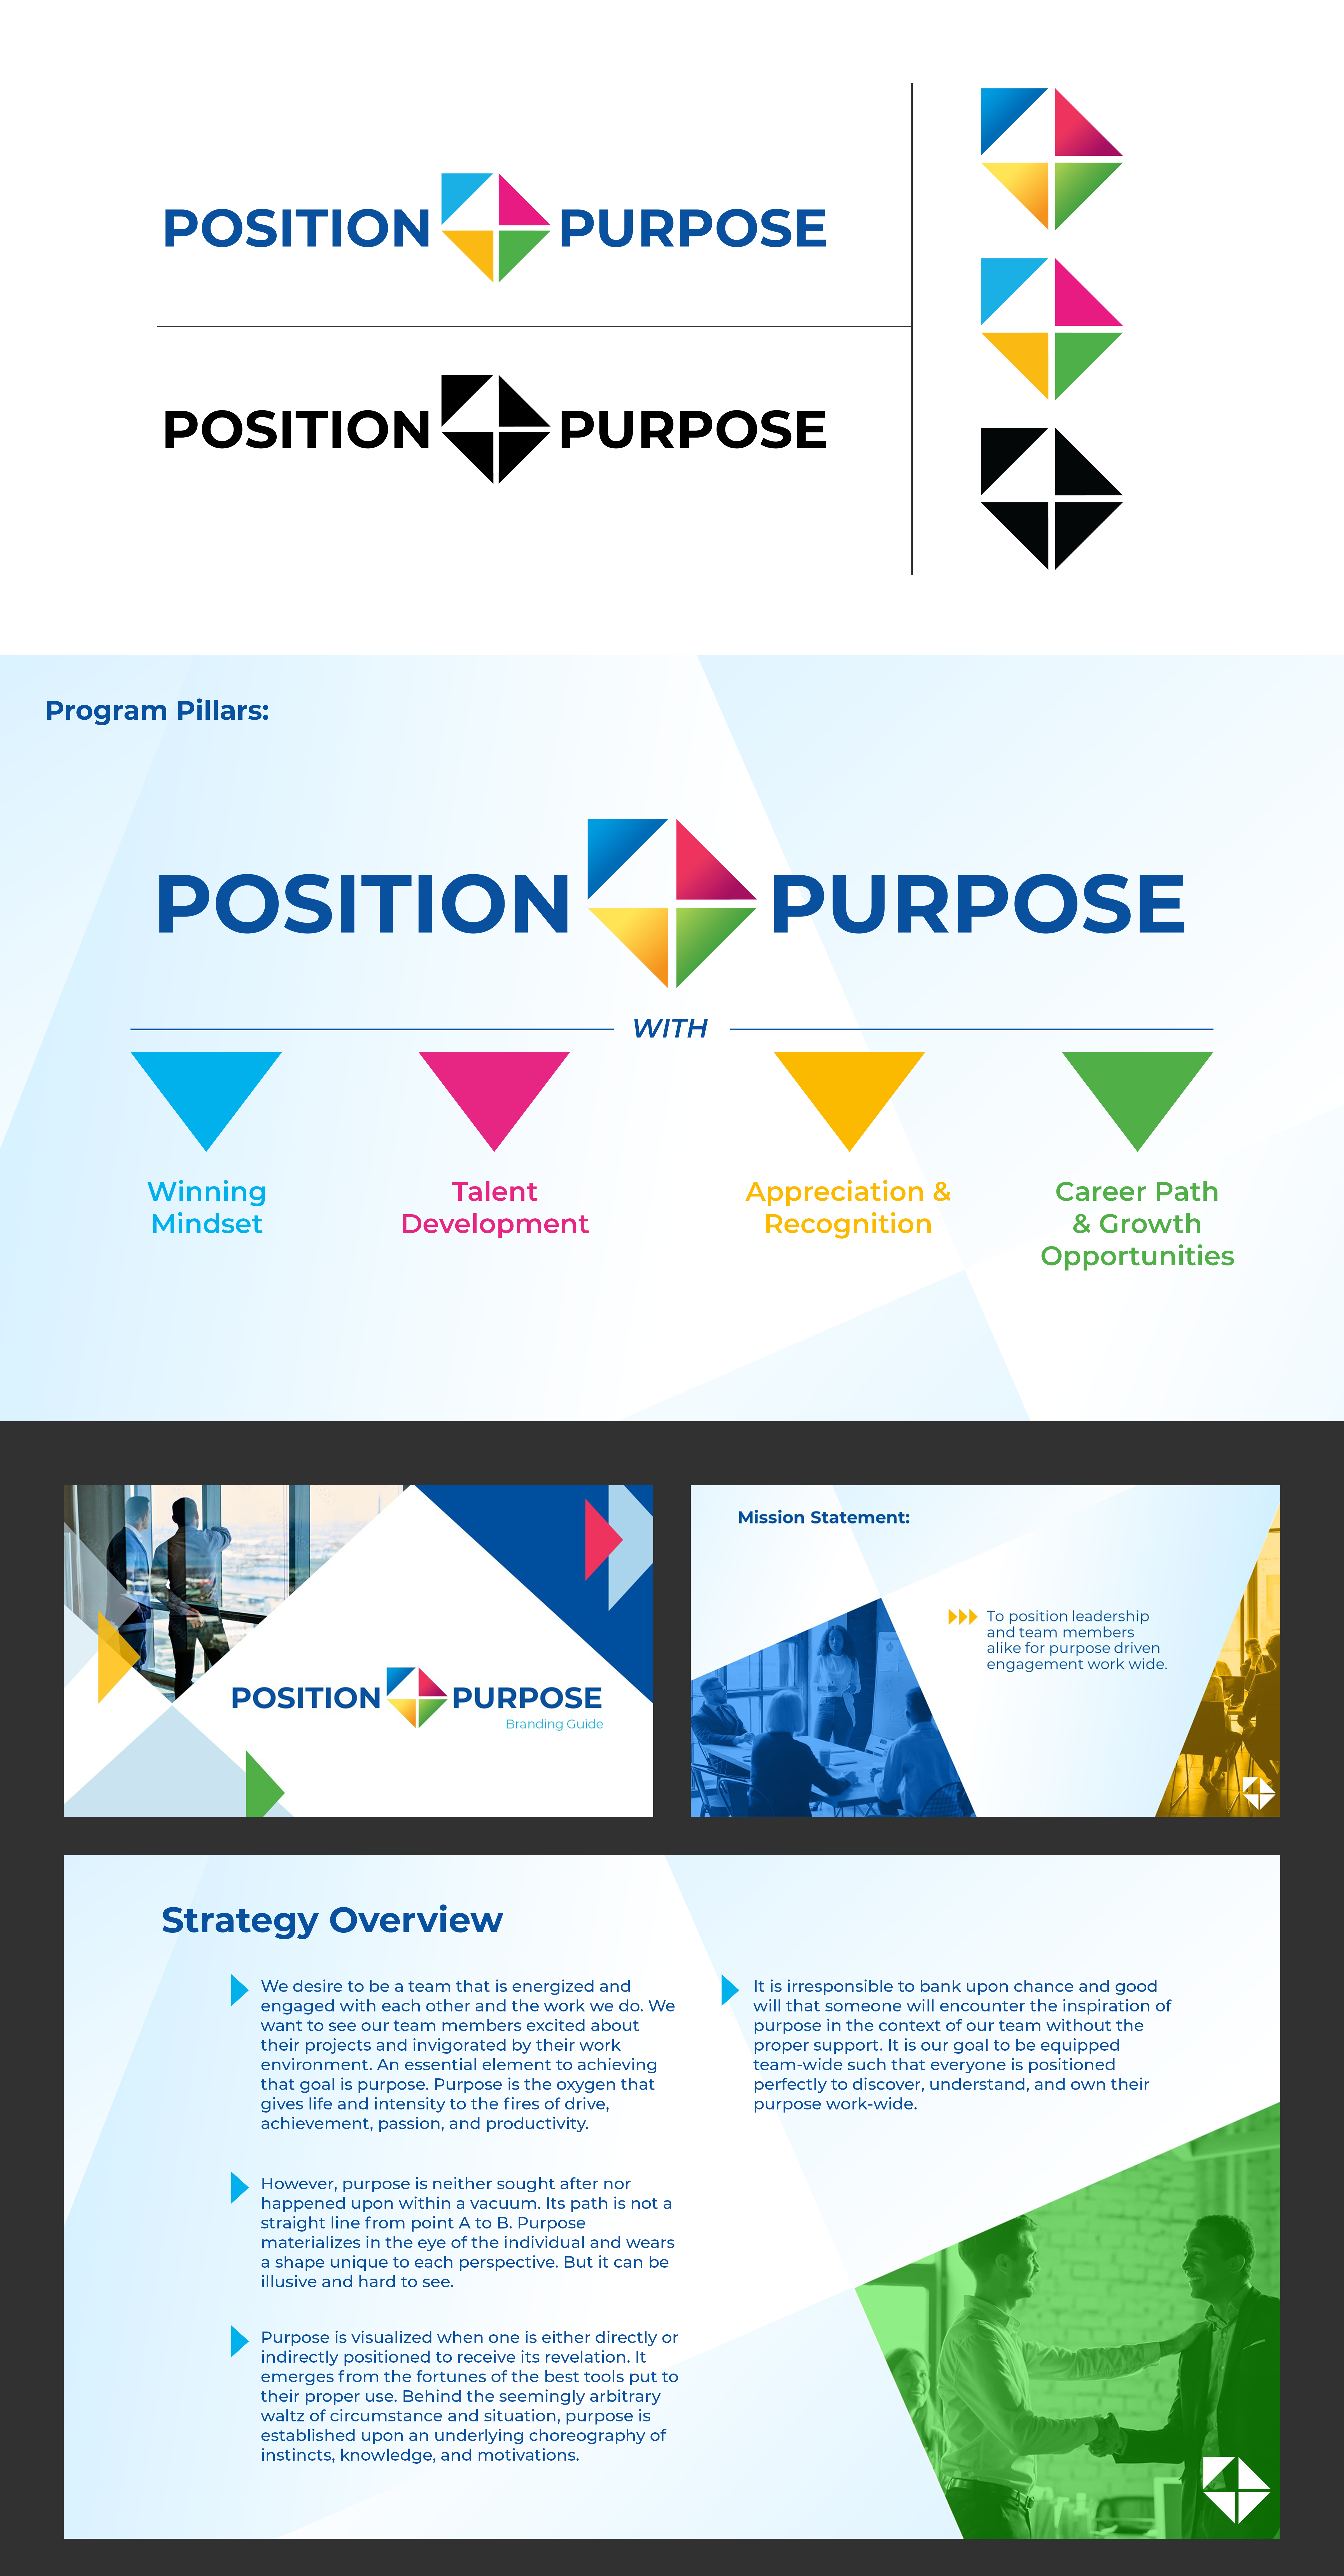 Position 4 Purpose